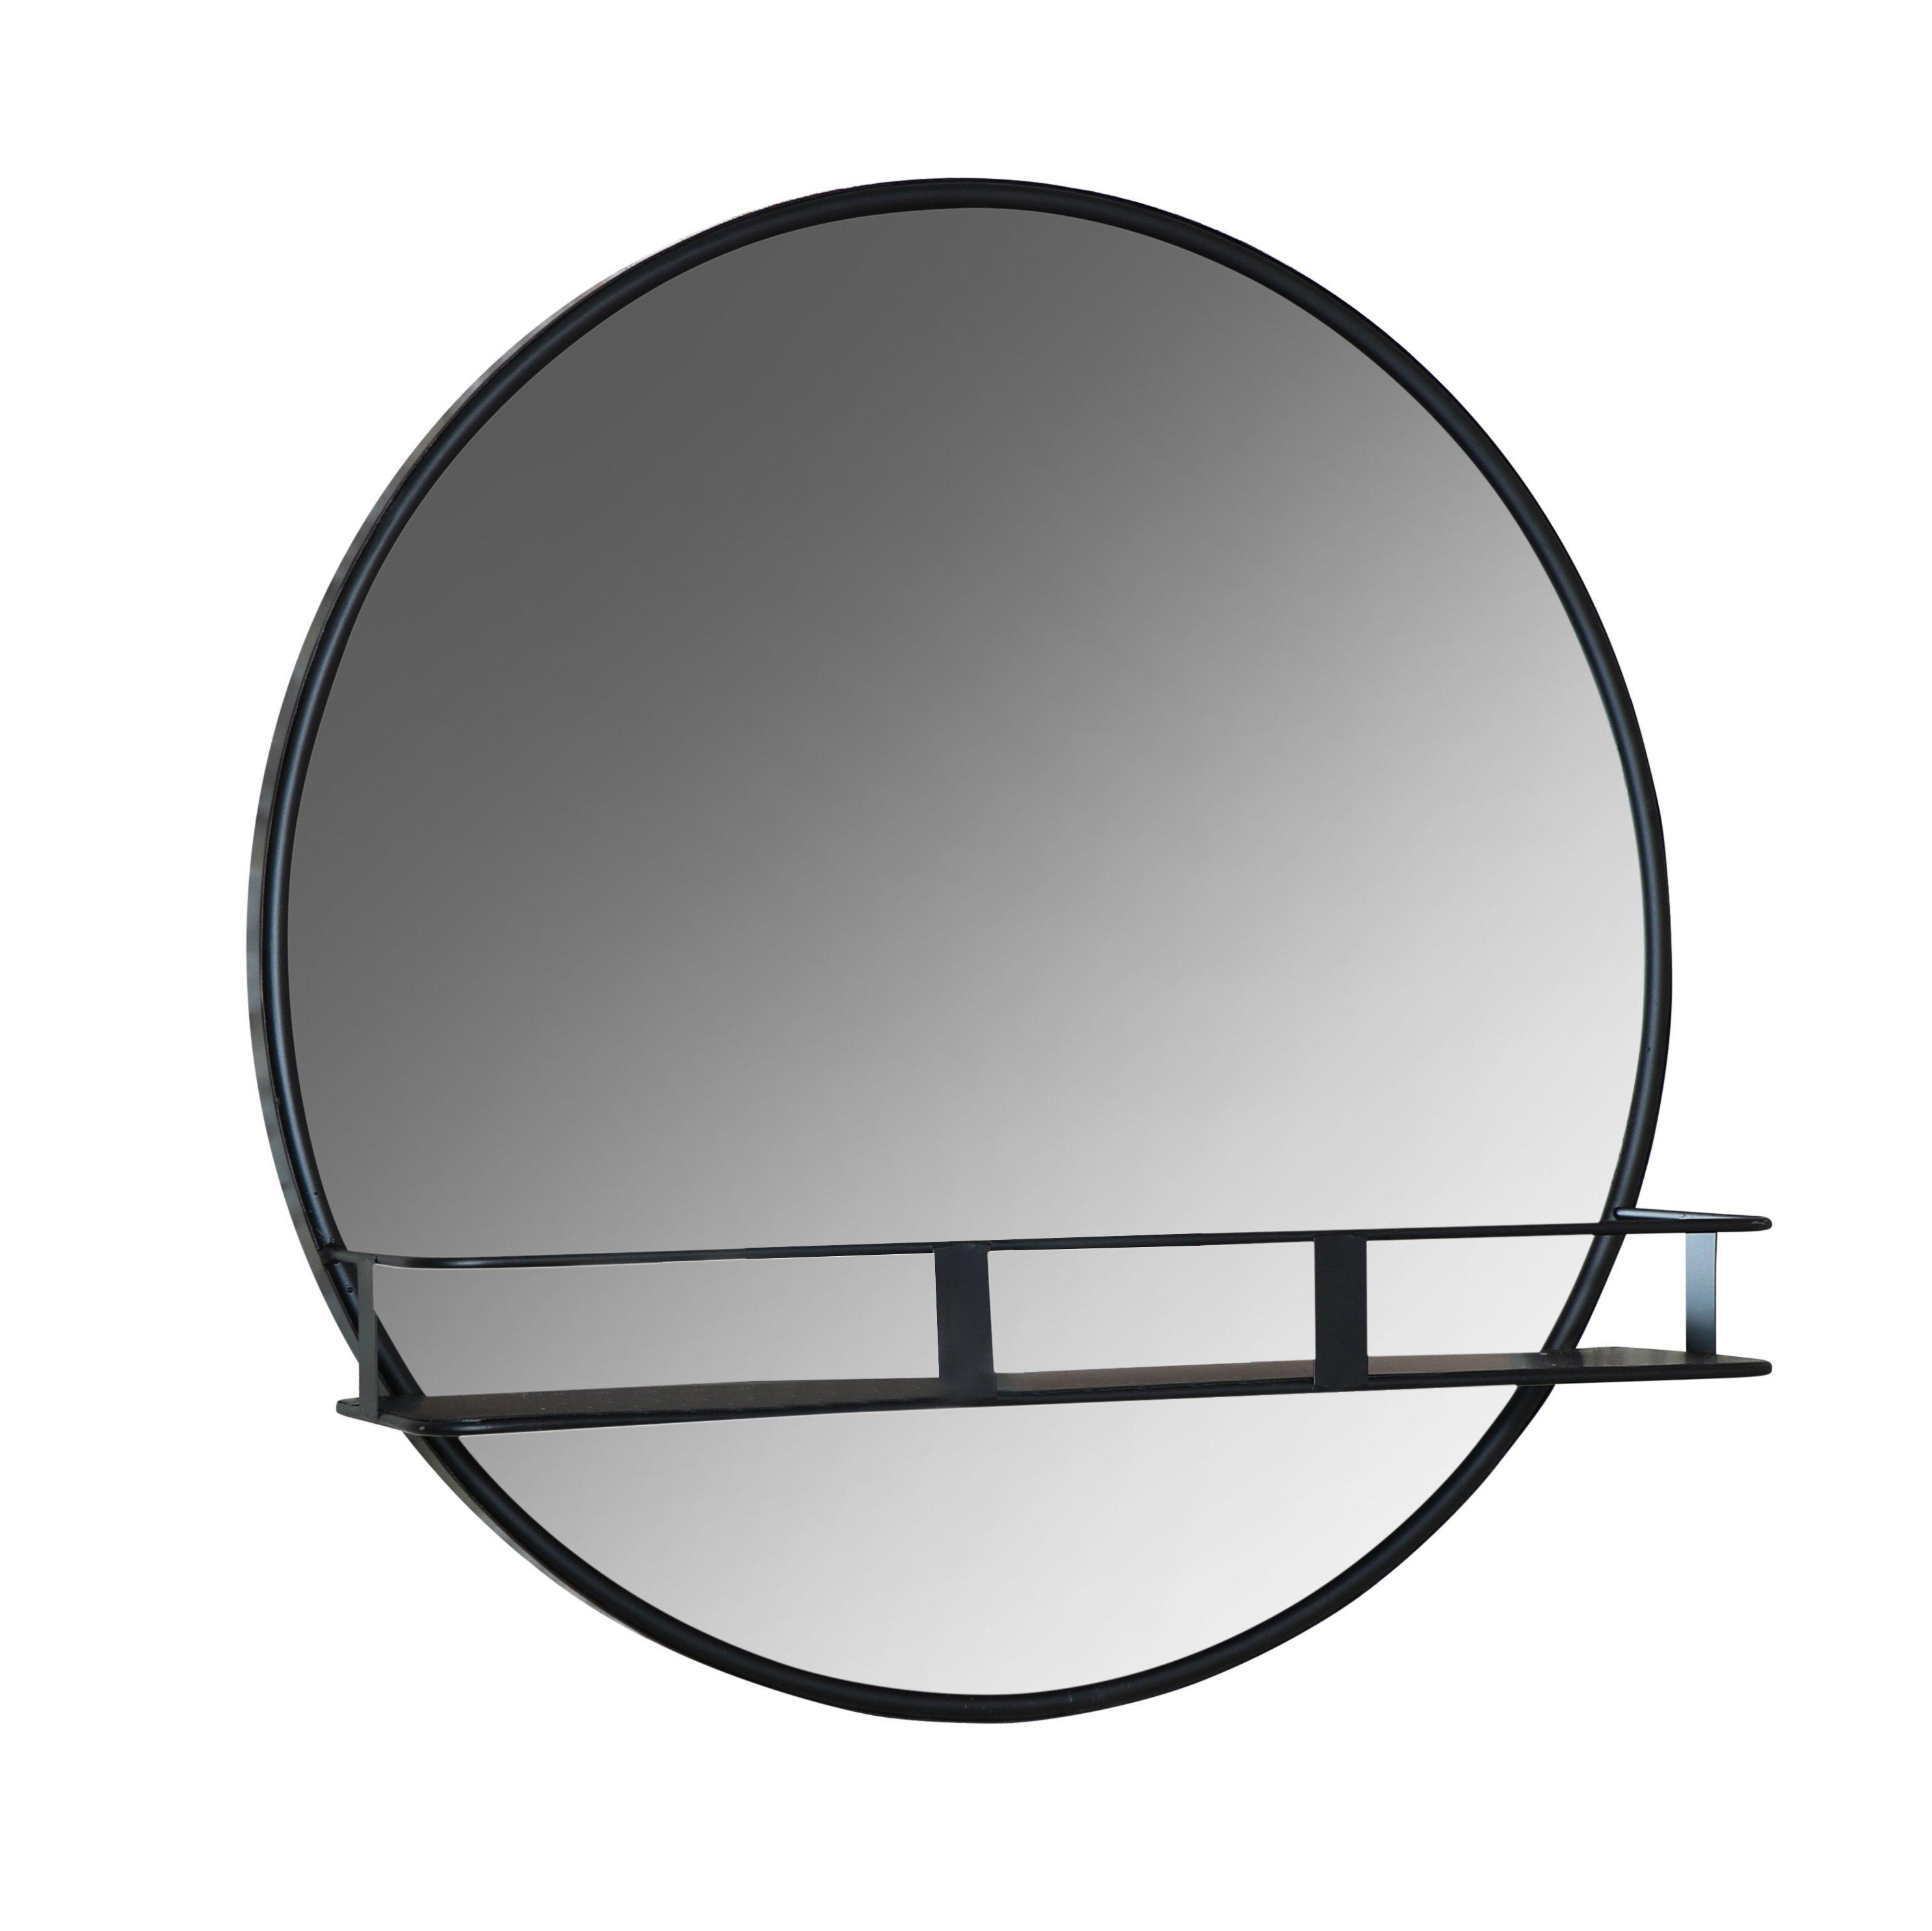 Round Wall Mirror With Shelf